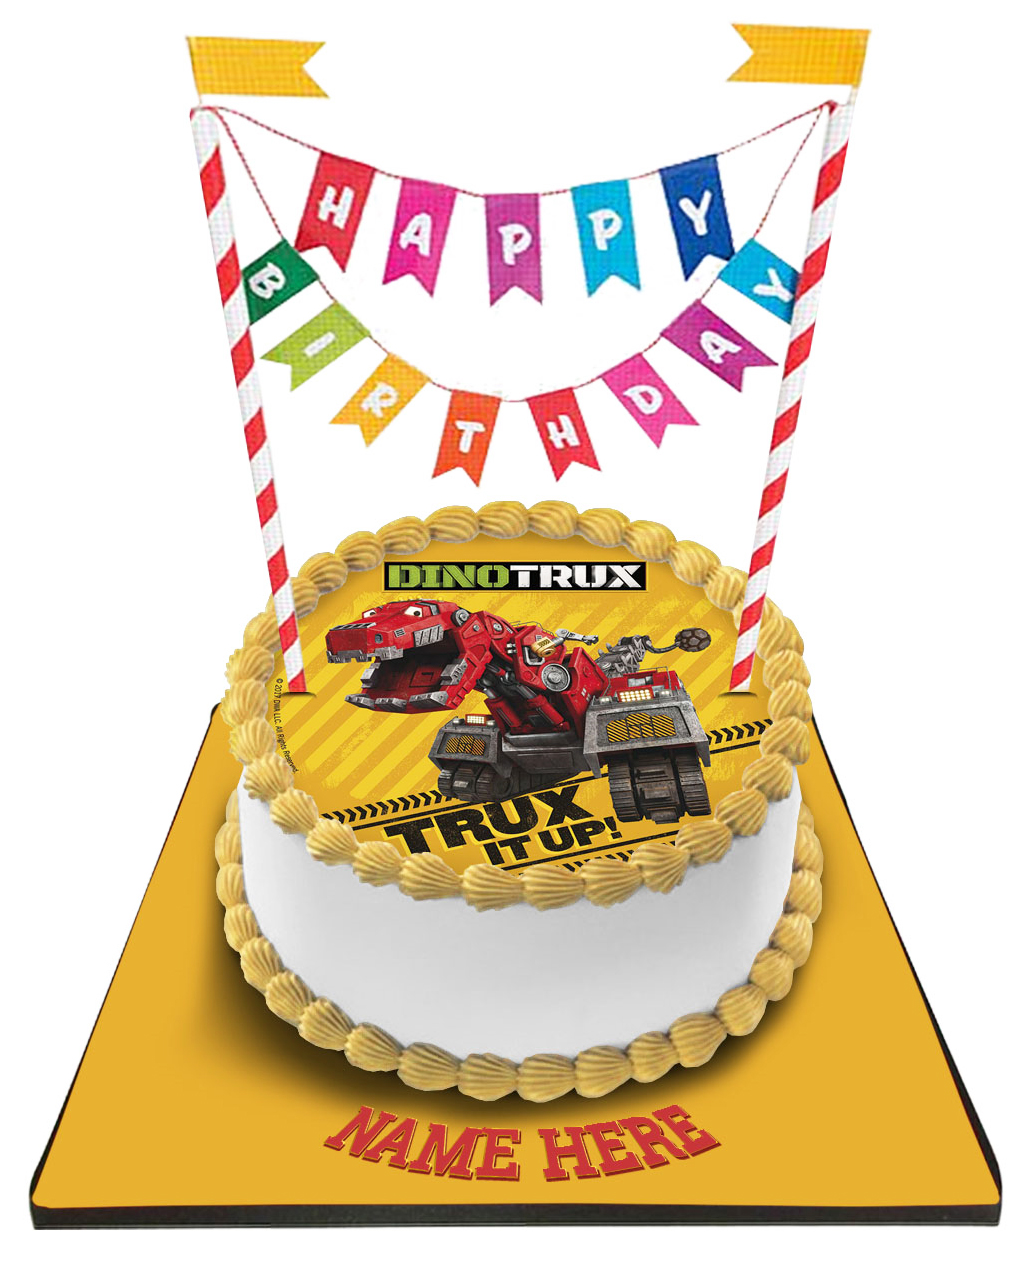 Dino Trux Cake with Happy Birthday Bunting